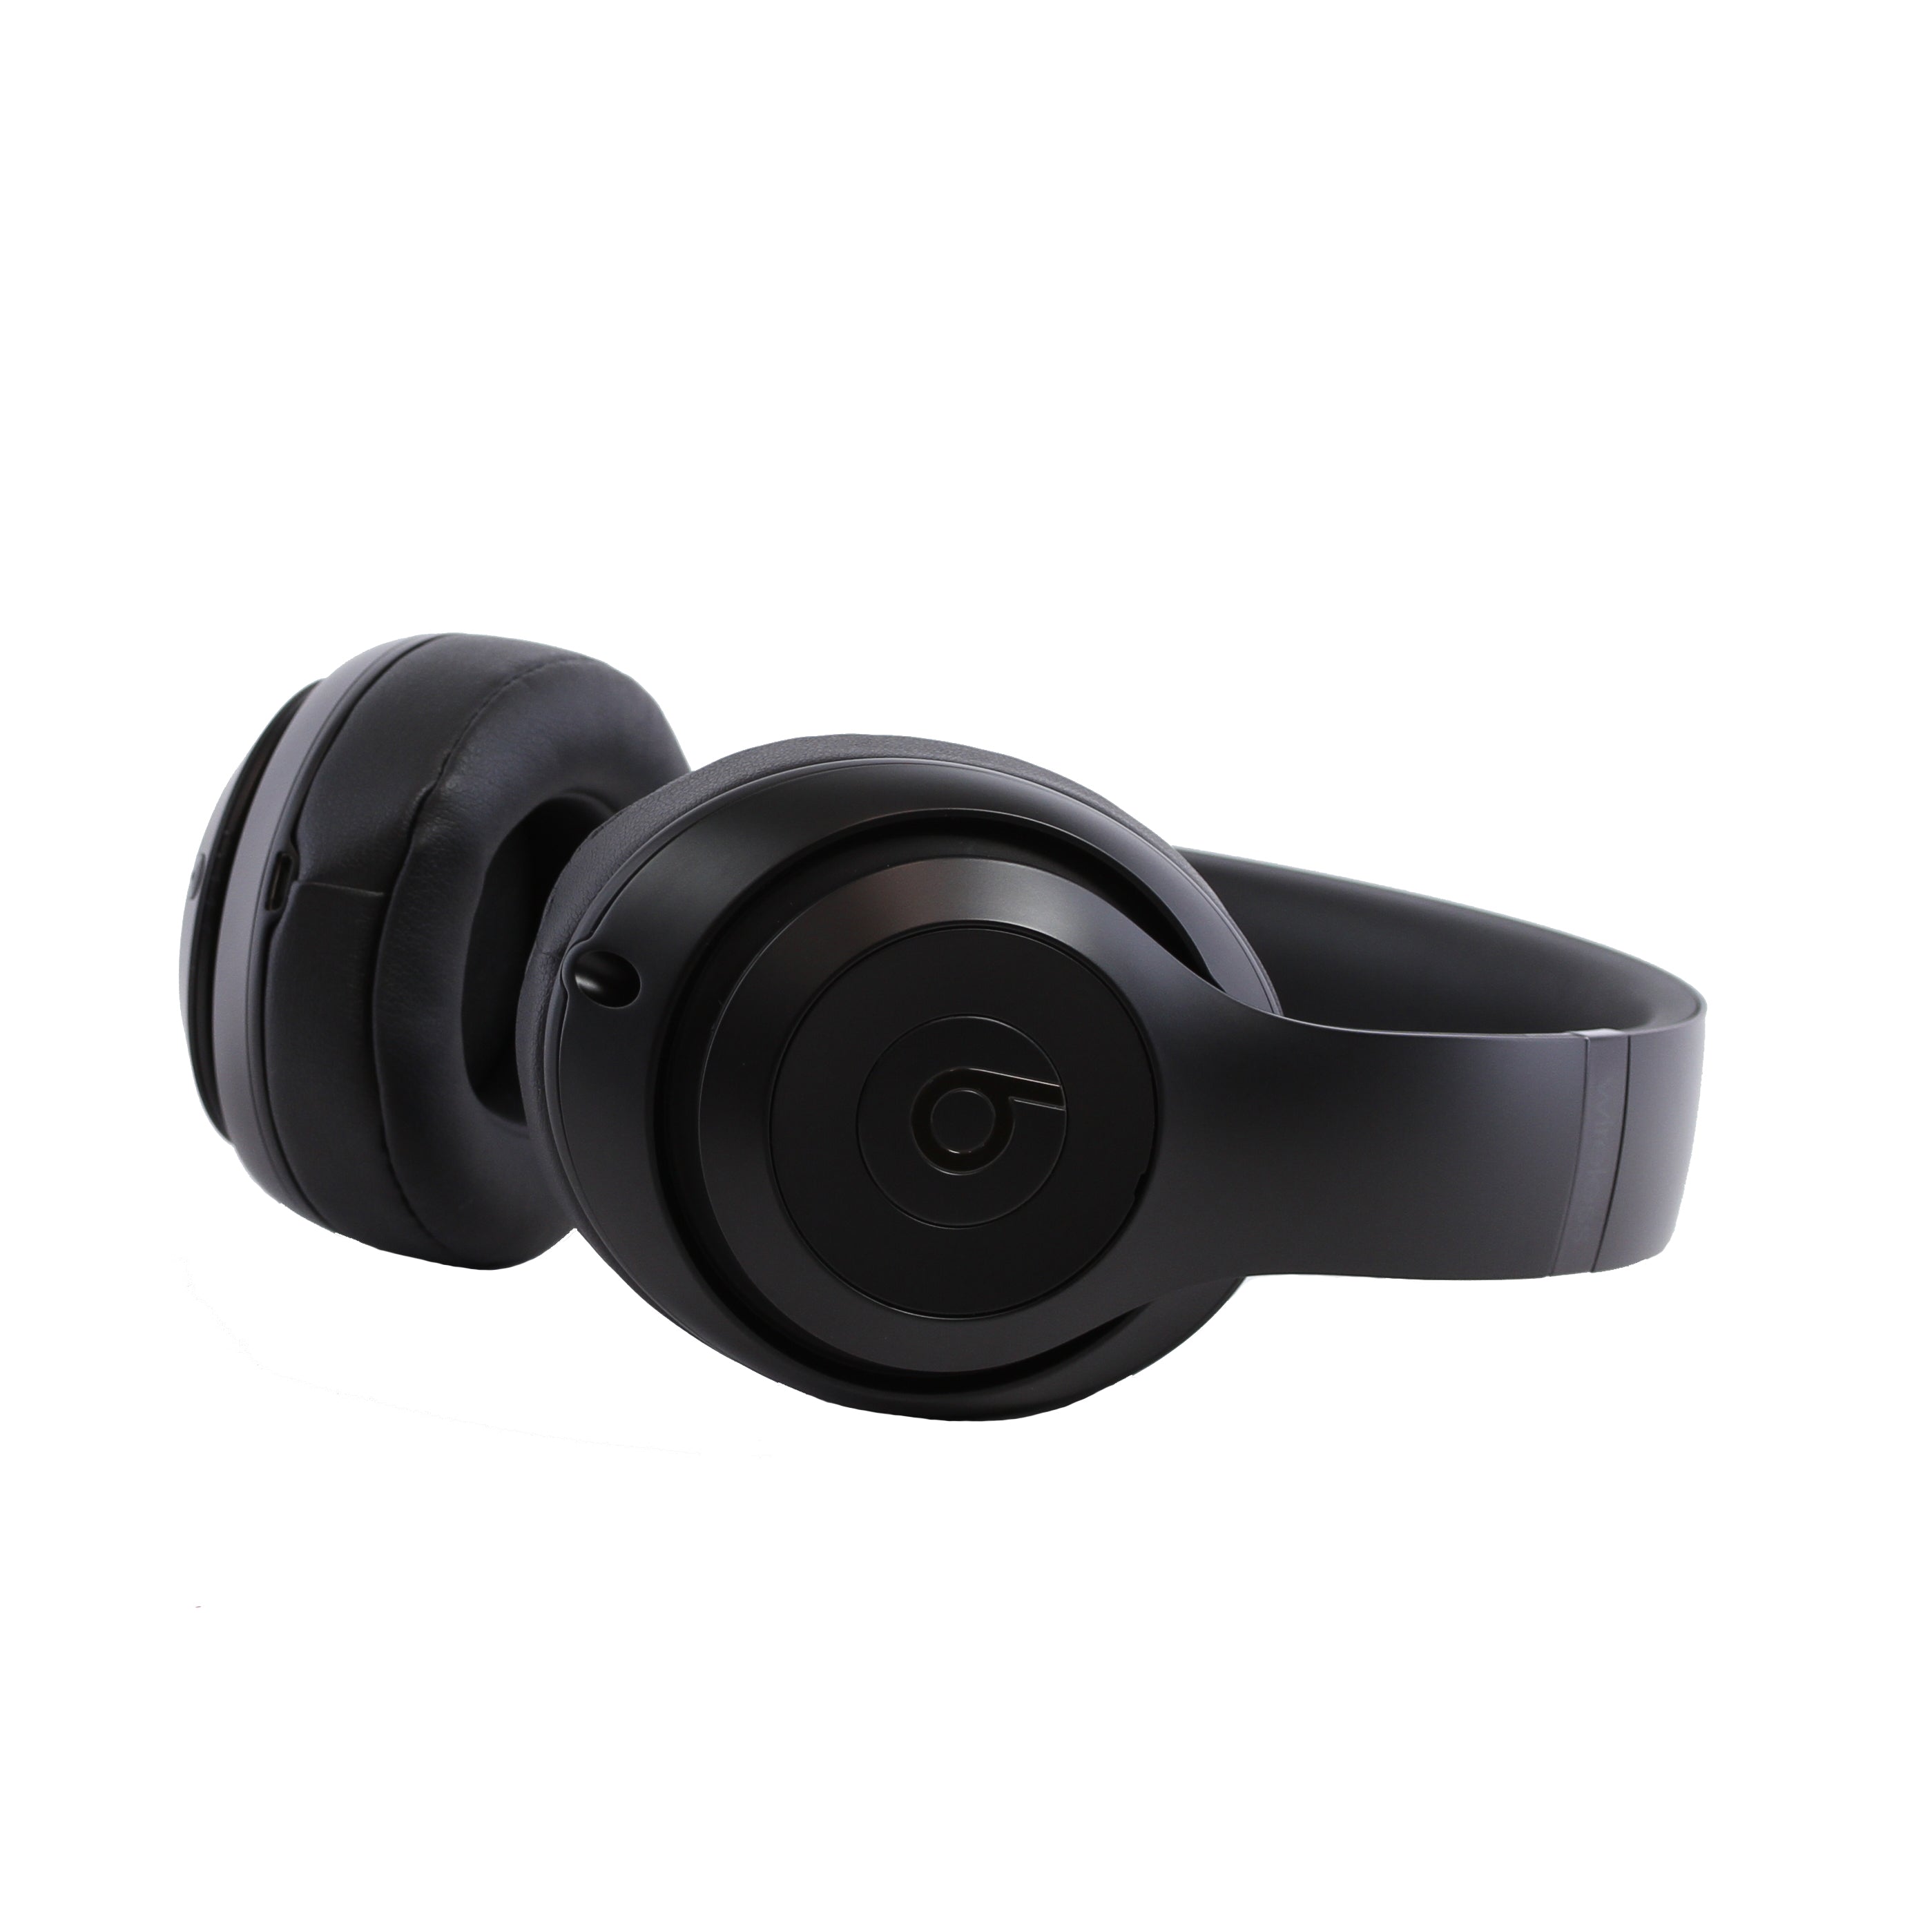 Beats By Dr. Dre Beats Studio3 Wireless Over-Ear Headphones - Matte Black (New)